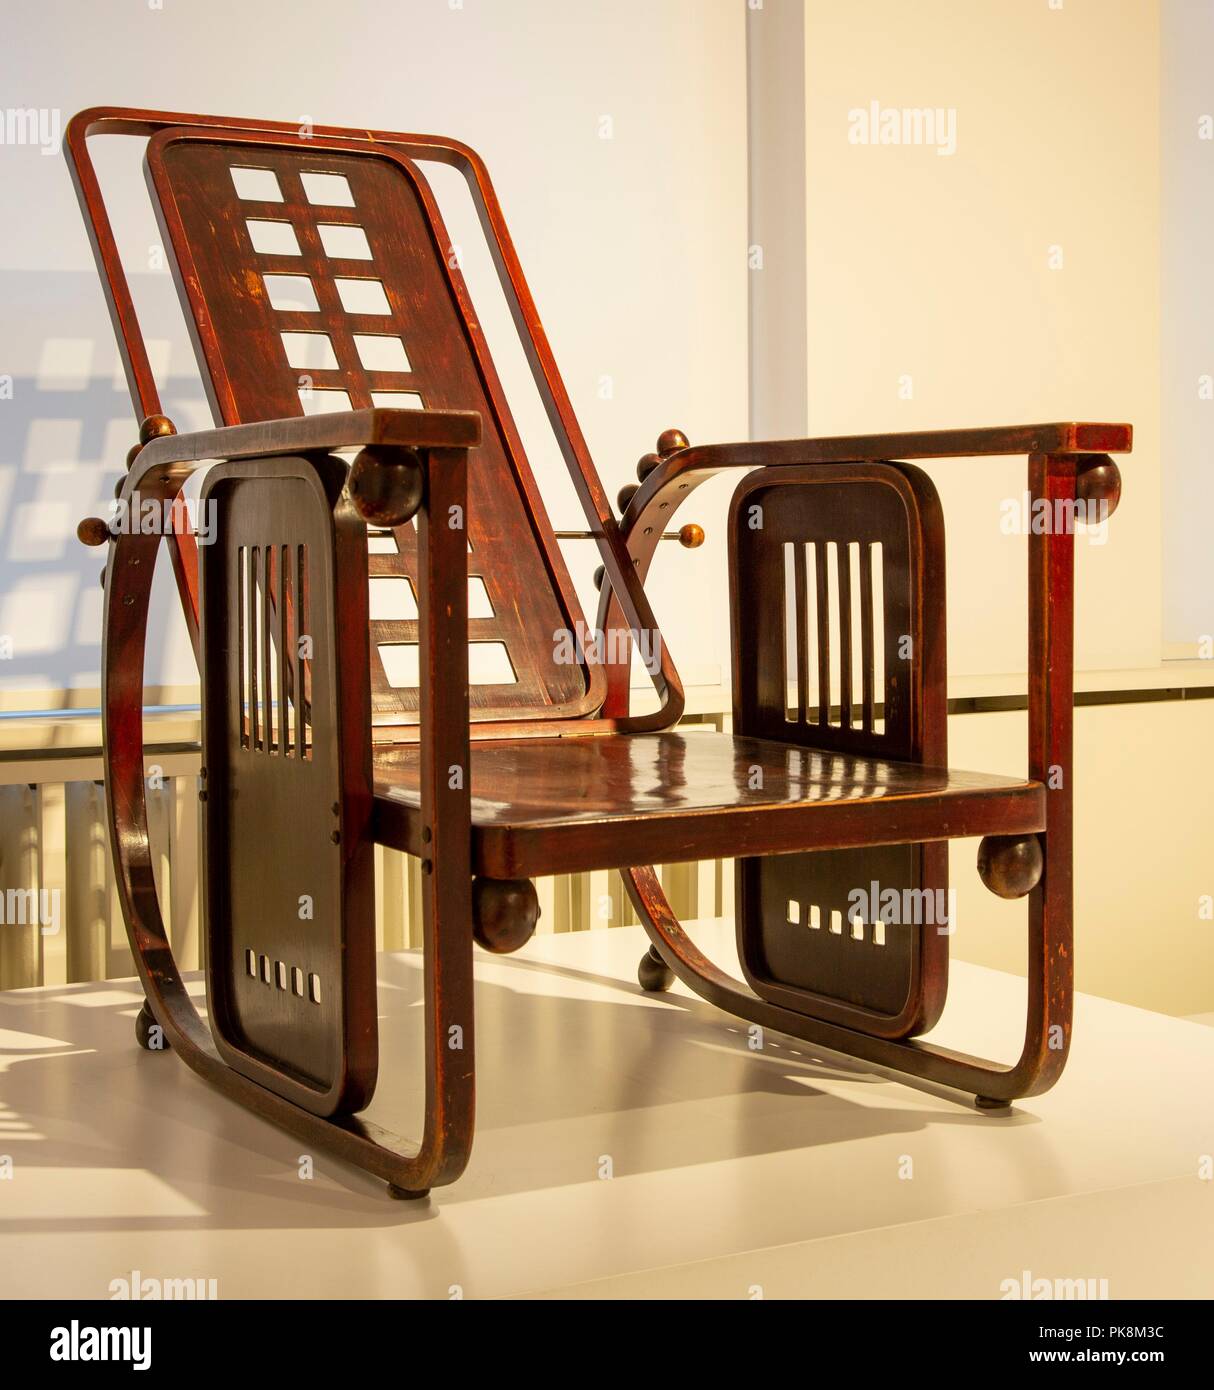 Chair designed by Josef Hoffmann, 'Sitzmachine', 1905, (2018) Creator: Alan John Ainsworth. Stock Photo